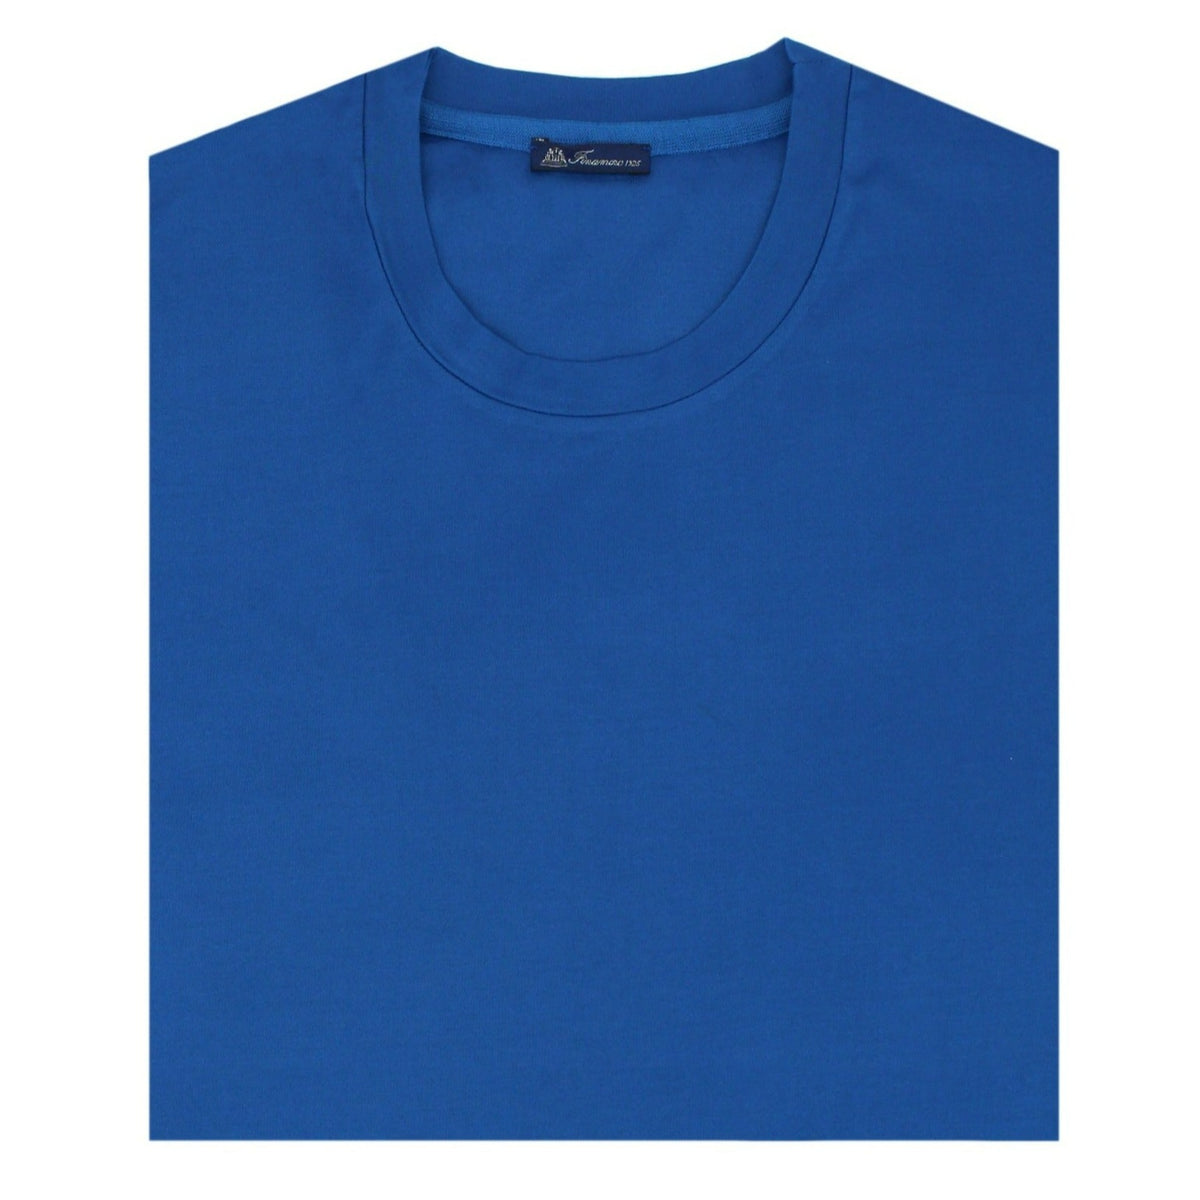 T-shirt blu royal in cotone Supima tinto in capo